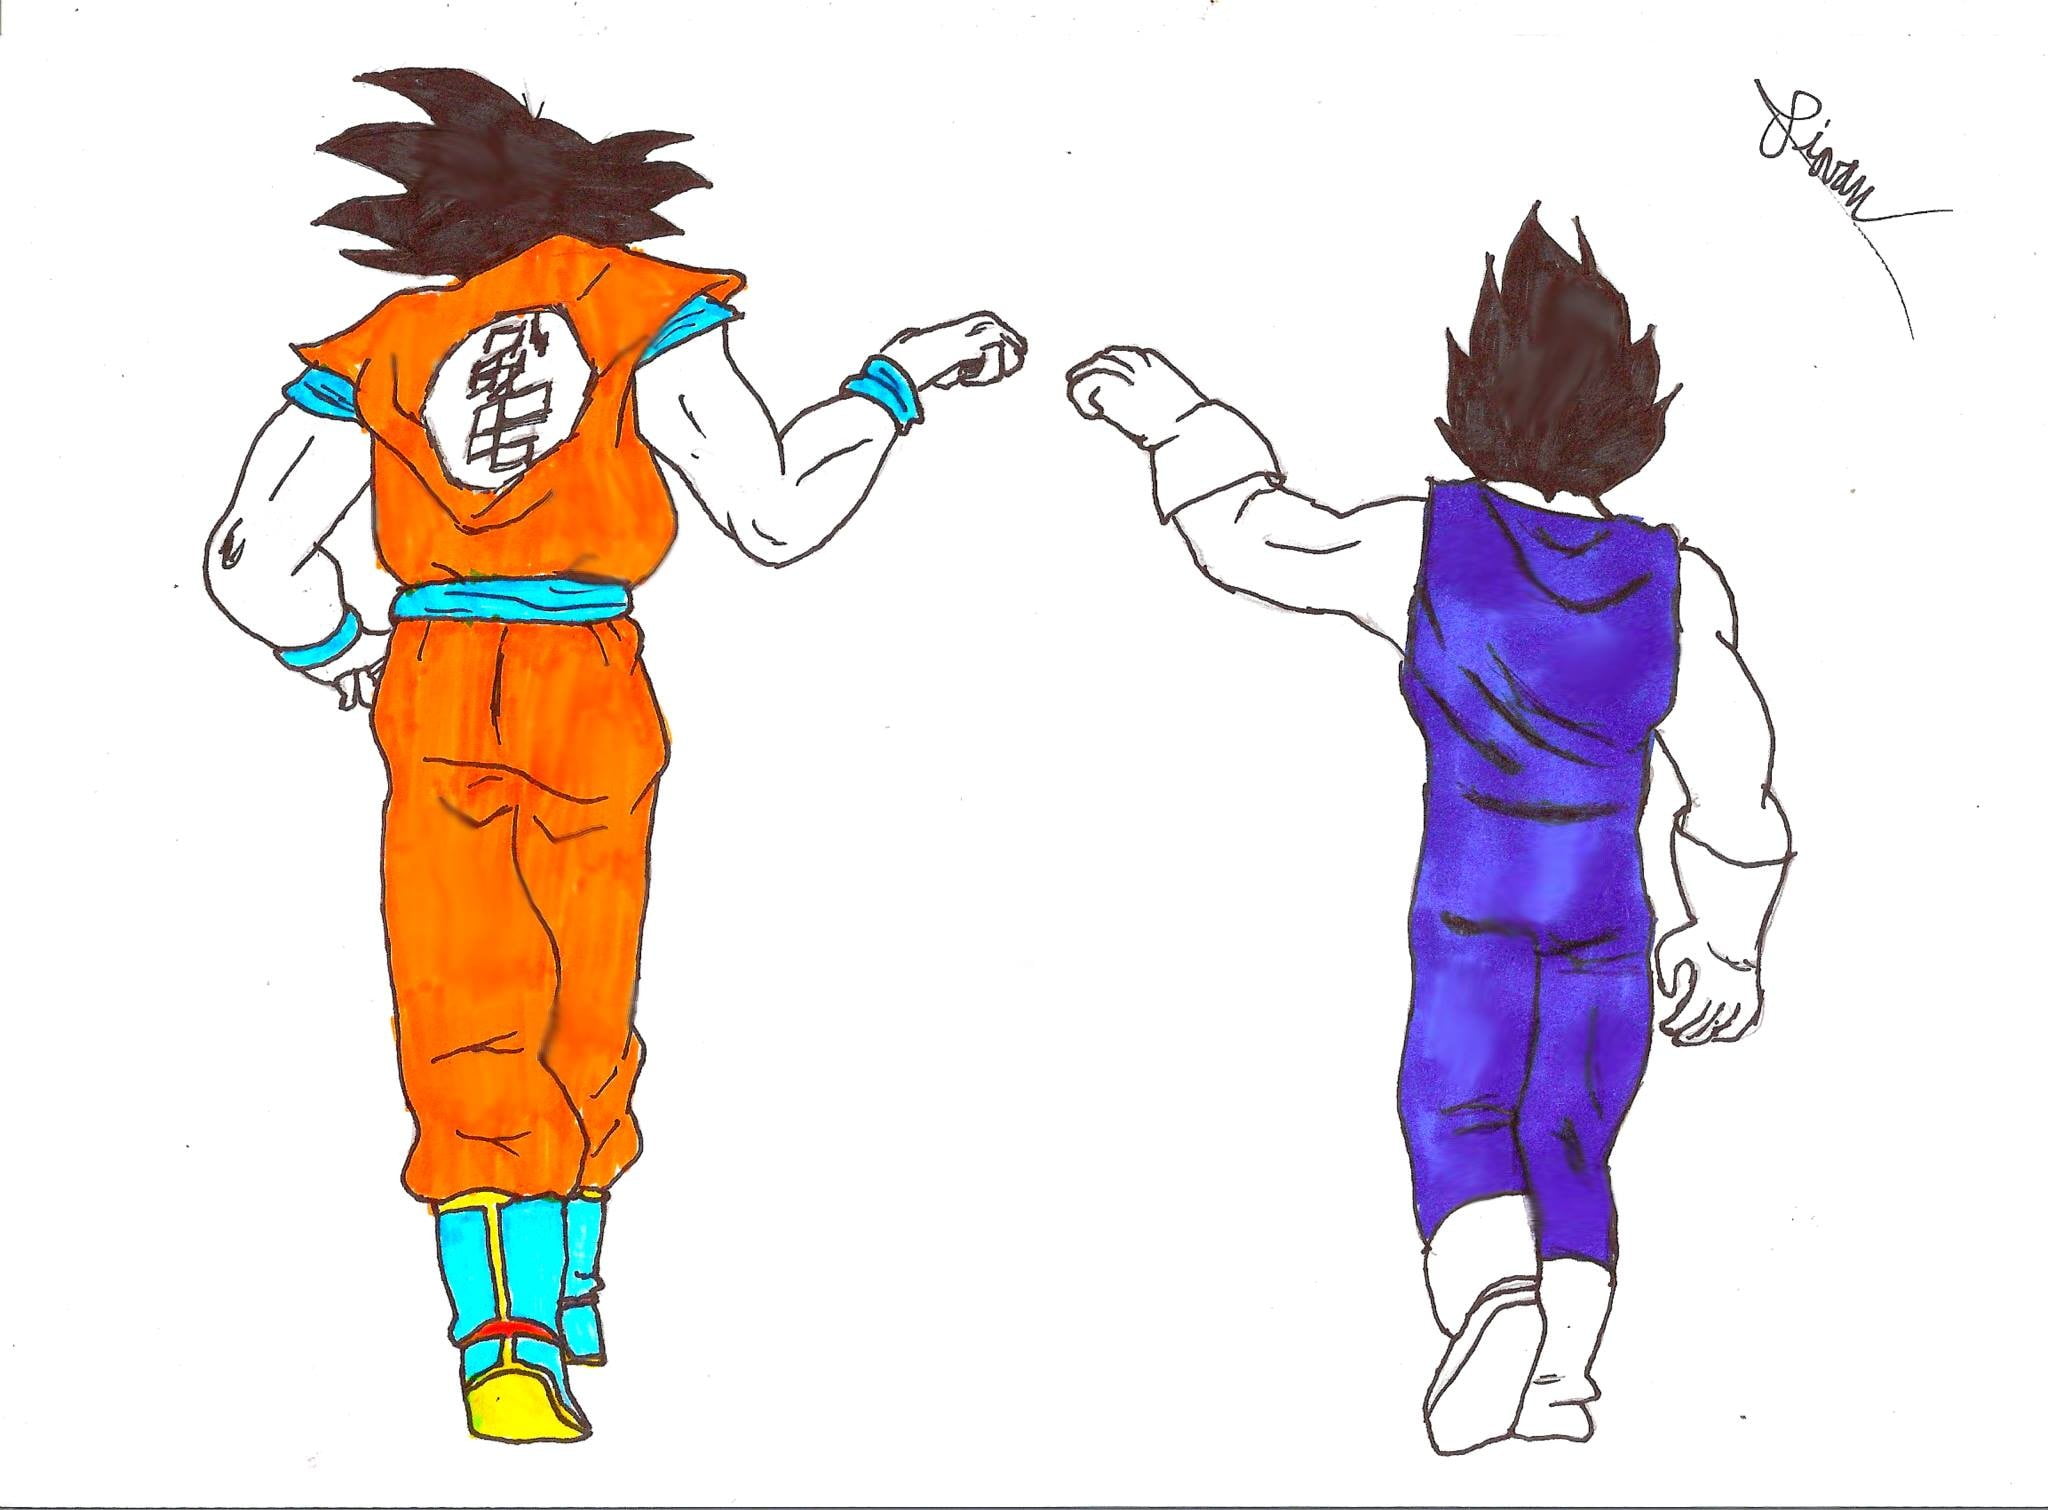 Vegeta vs Goku drawing credit to ciccosketch on insta  rdbz